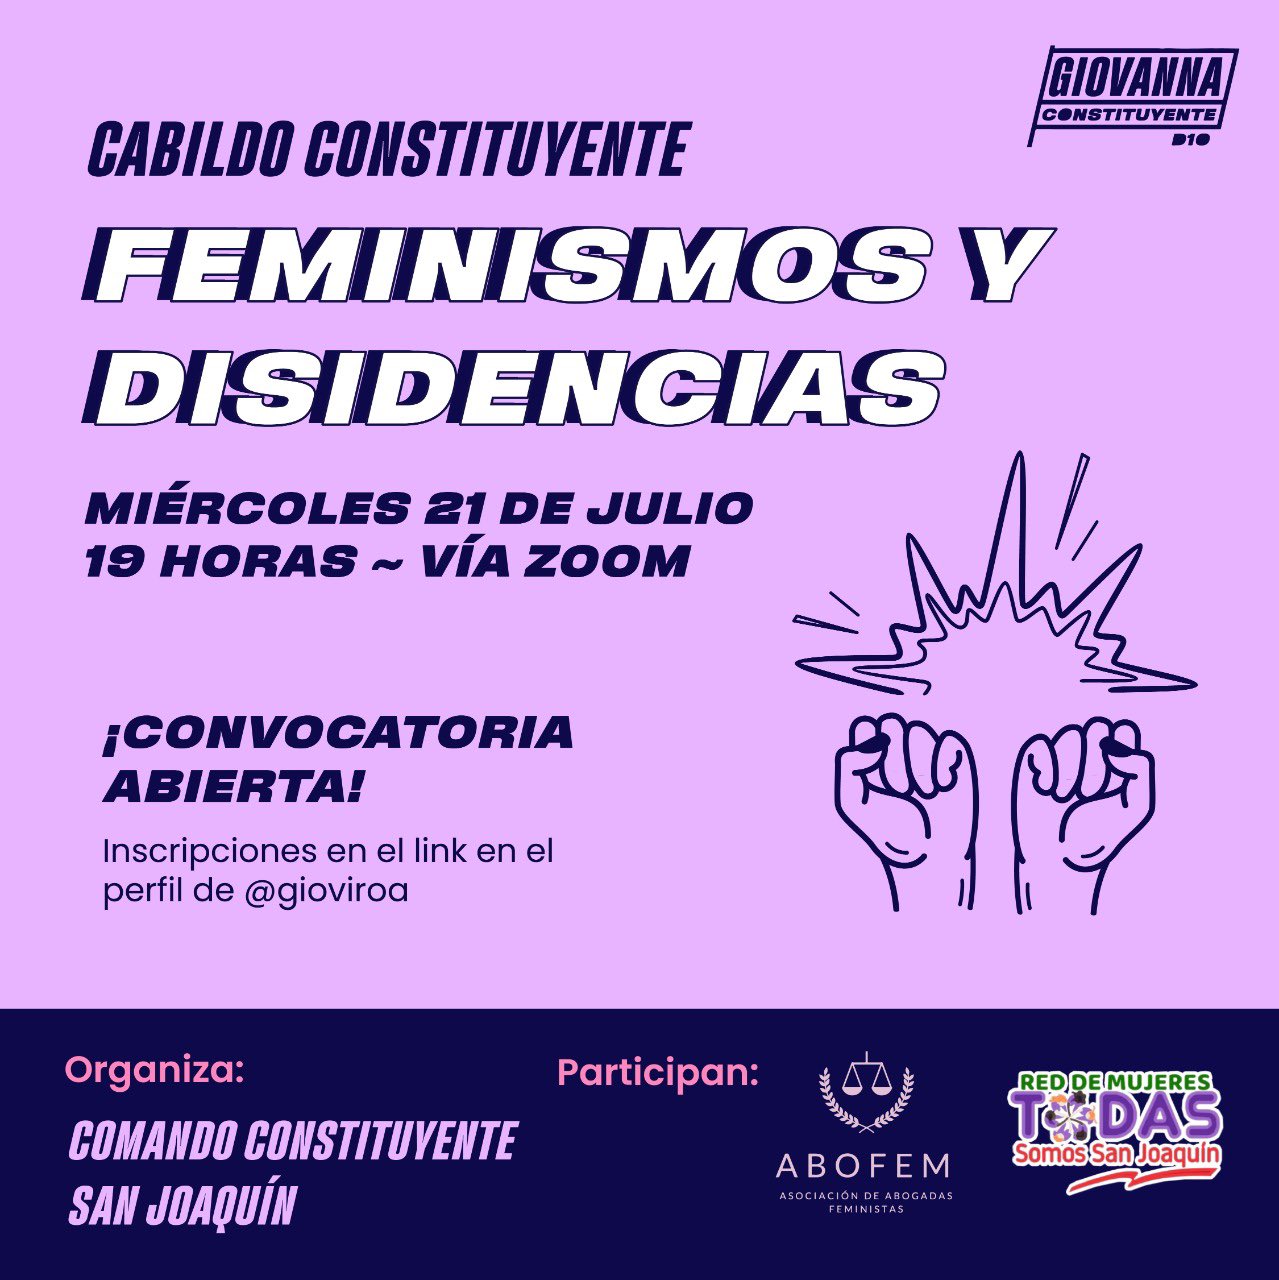 Cabildo constituyente: Feminismos y disidencias